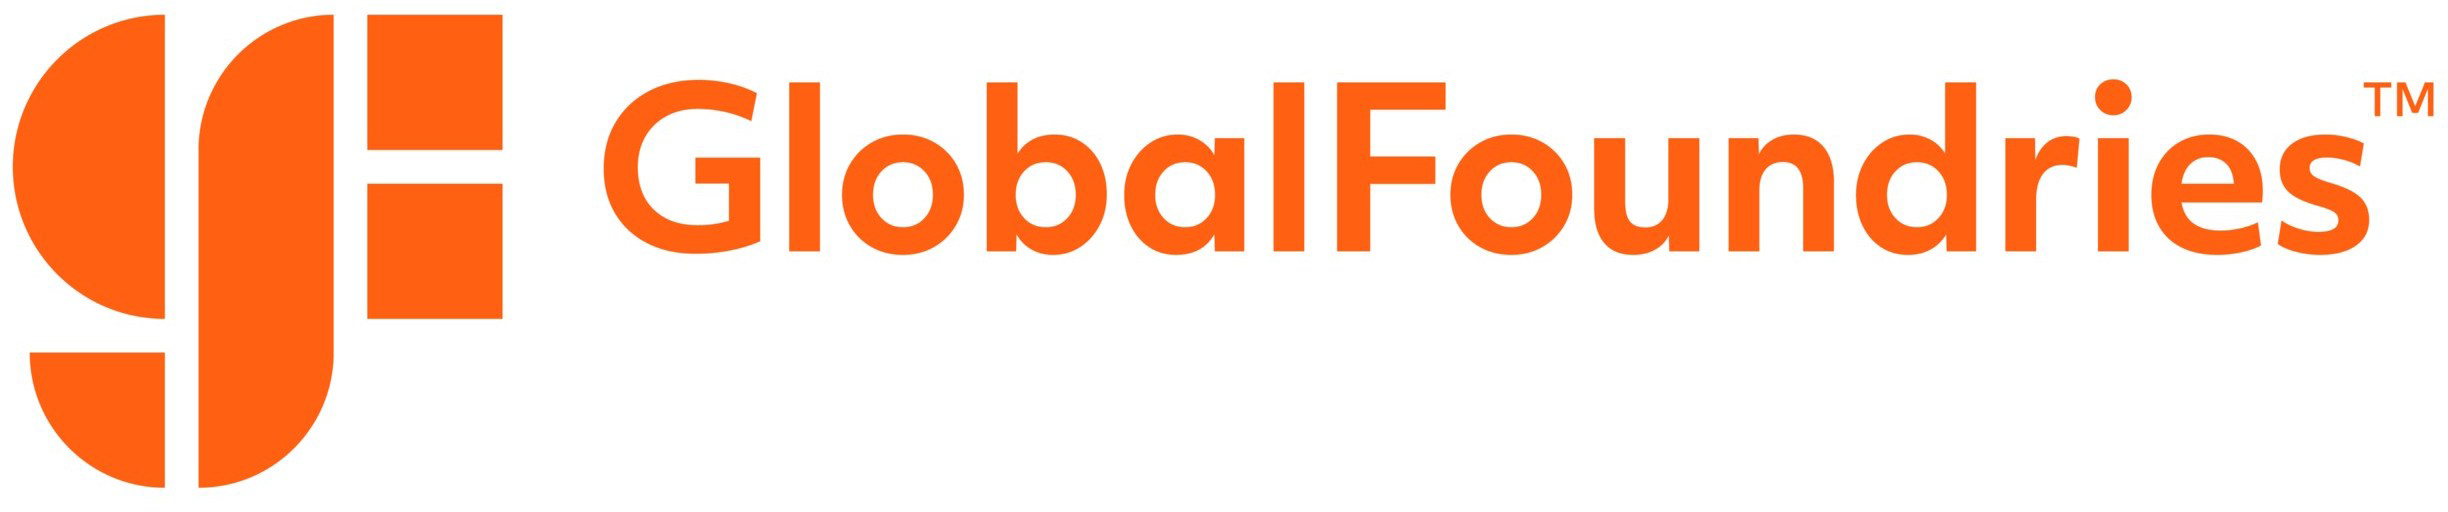 Globalfoundries Logo Long